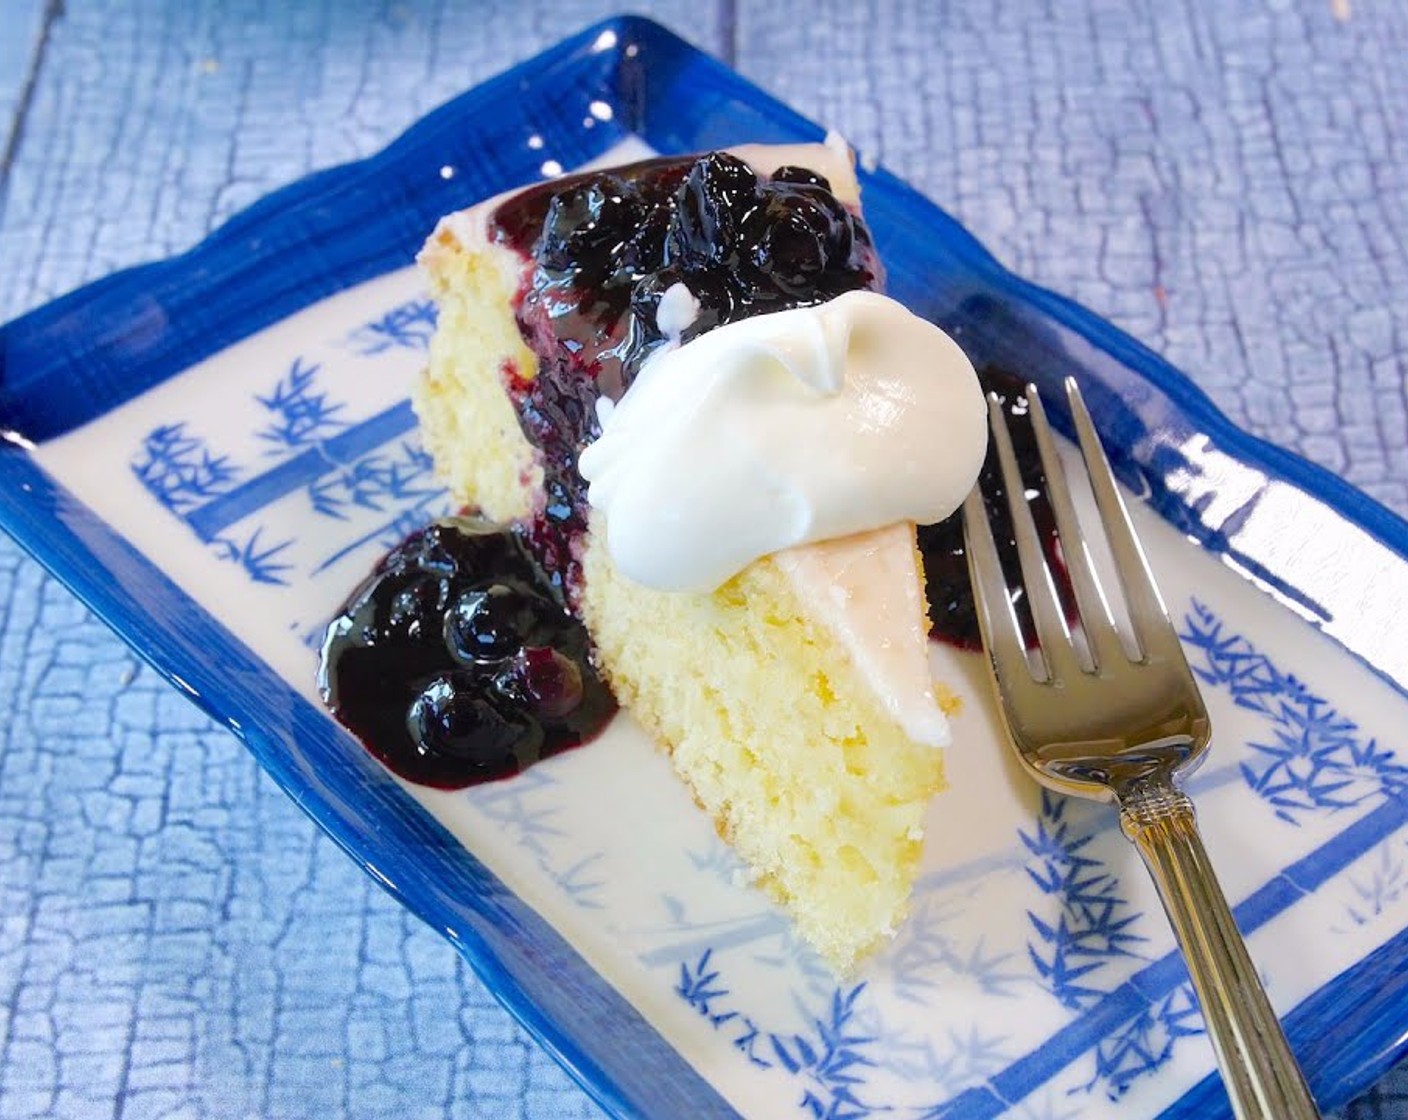 Lemon-Glazed Cornmeal Cake with Blueberry Sauce